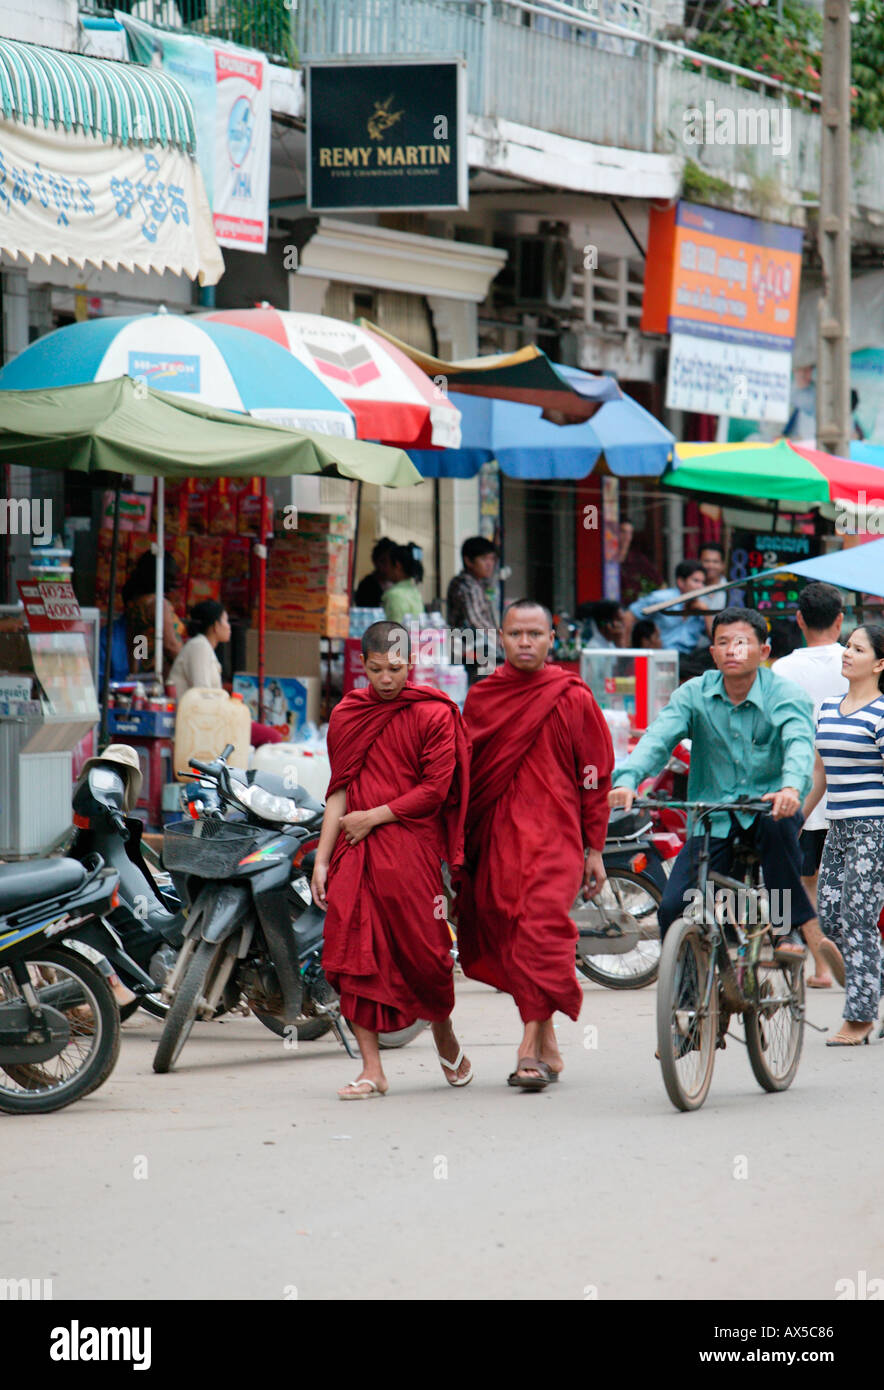 Image T0312054 Monks on street in Phnom Penh Cambodia Asia Stock Photo